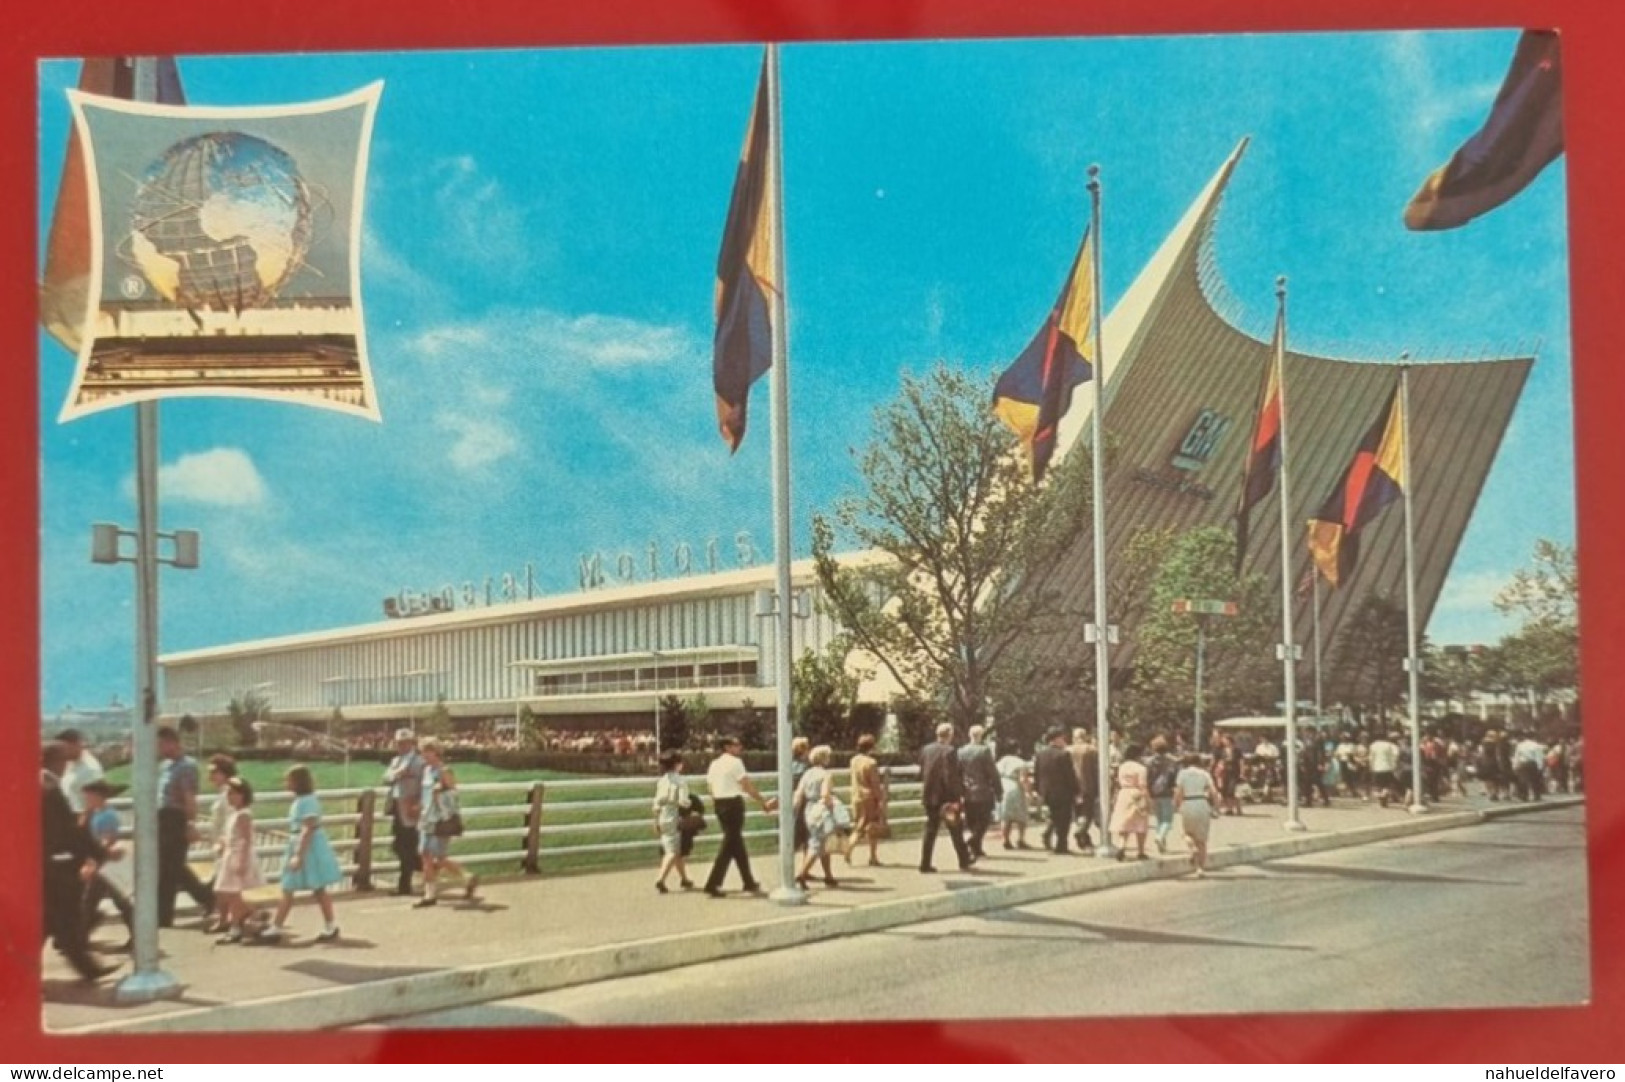 Uncirculated Postcard - USA - NY, NEW YORK WORLD'S FAIR 1964-65 - GENERAL MOTORS FUTURAMA BUILDING - Exhibitions